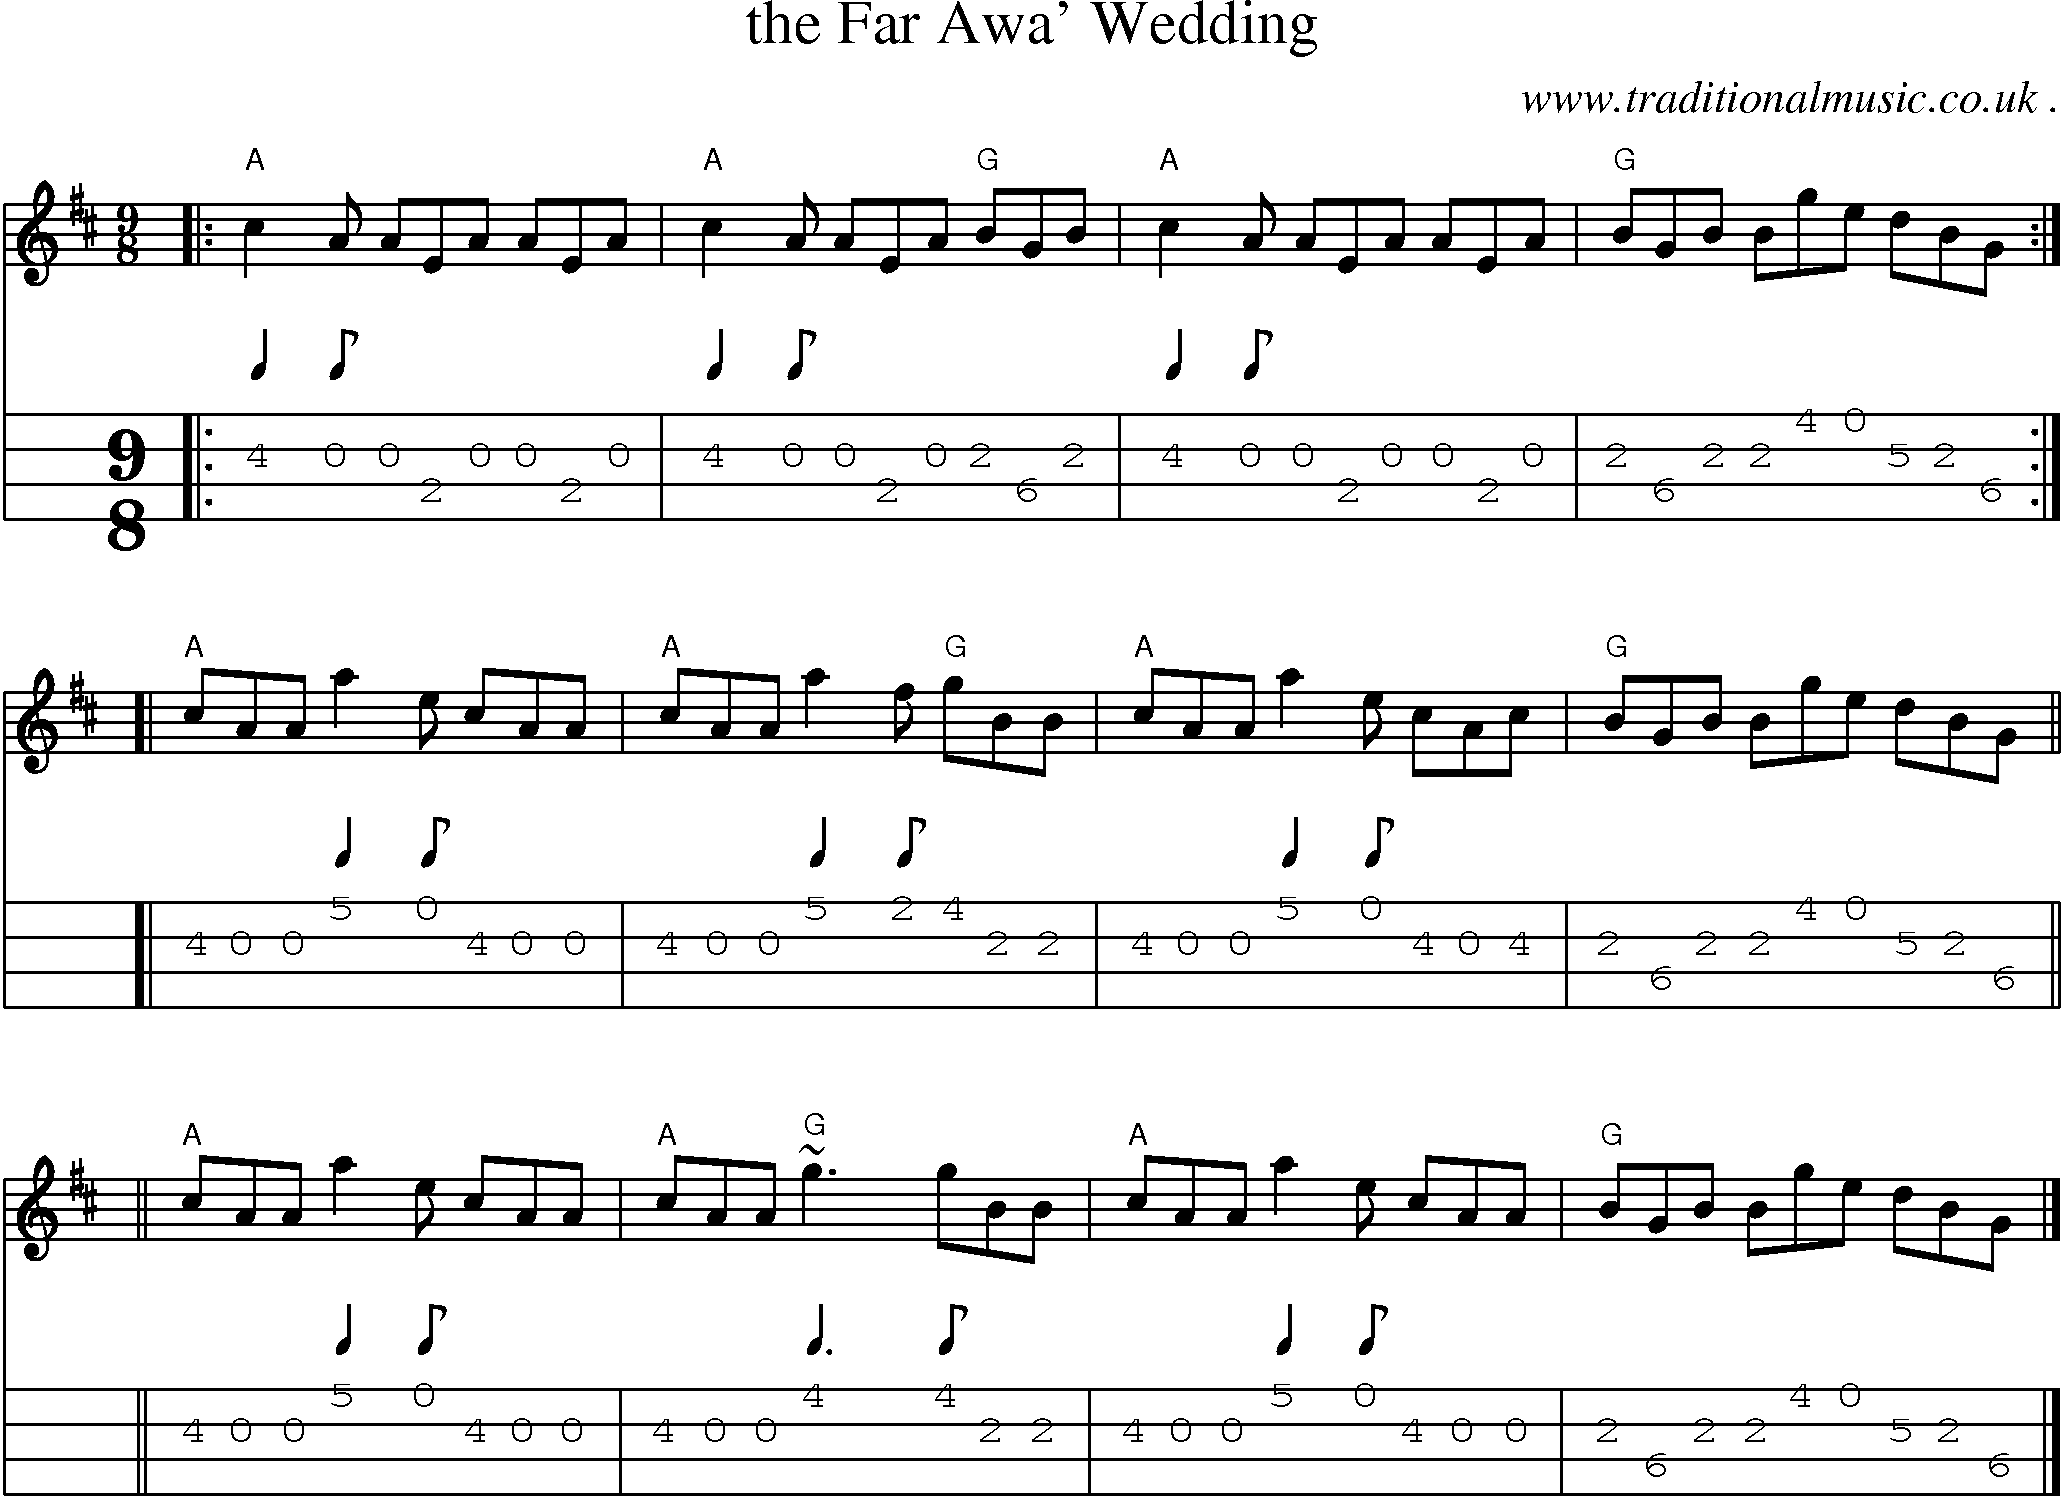 Sheet-music  score, Chords and Mandolin Tabs for The Far Awa Wedding